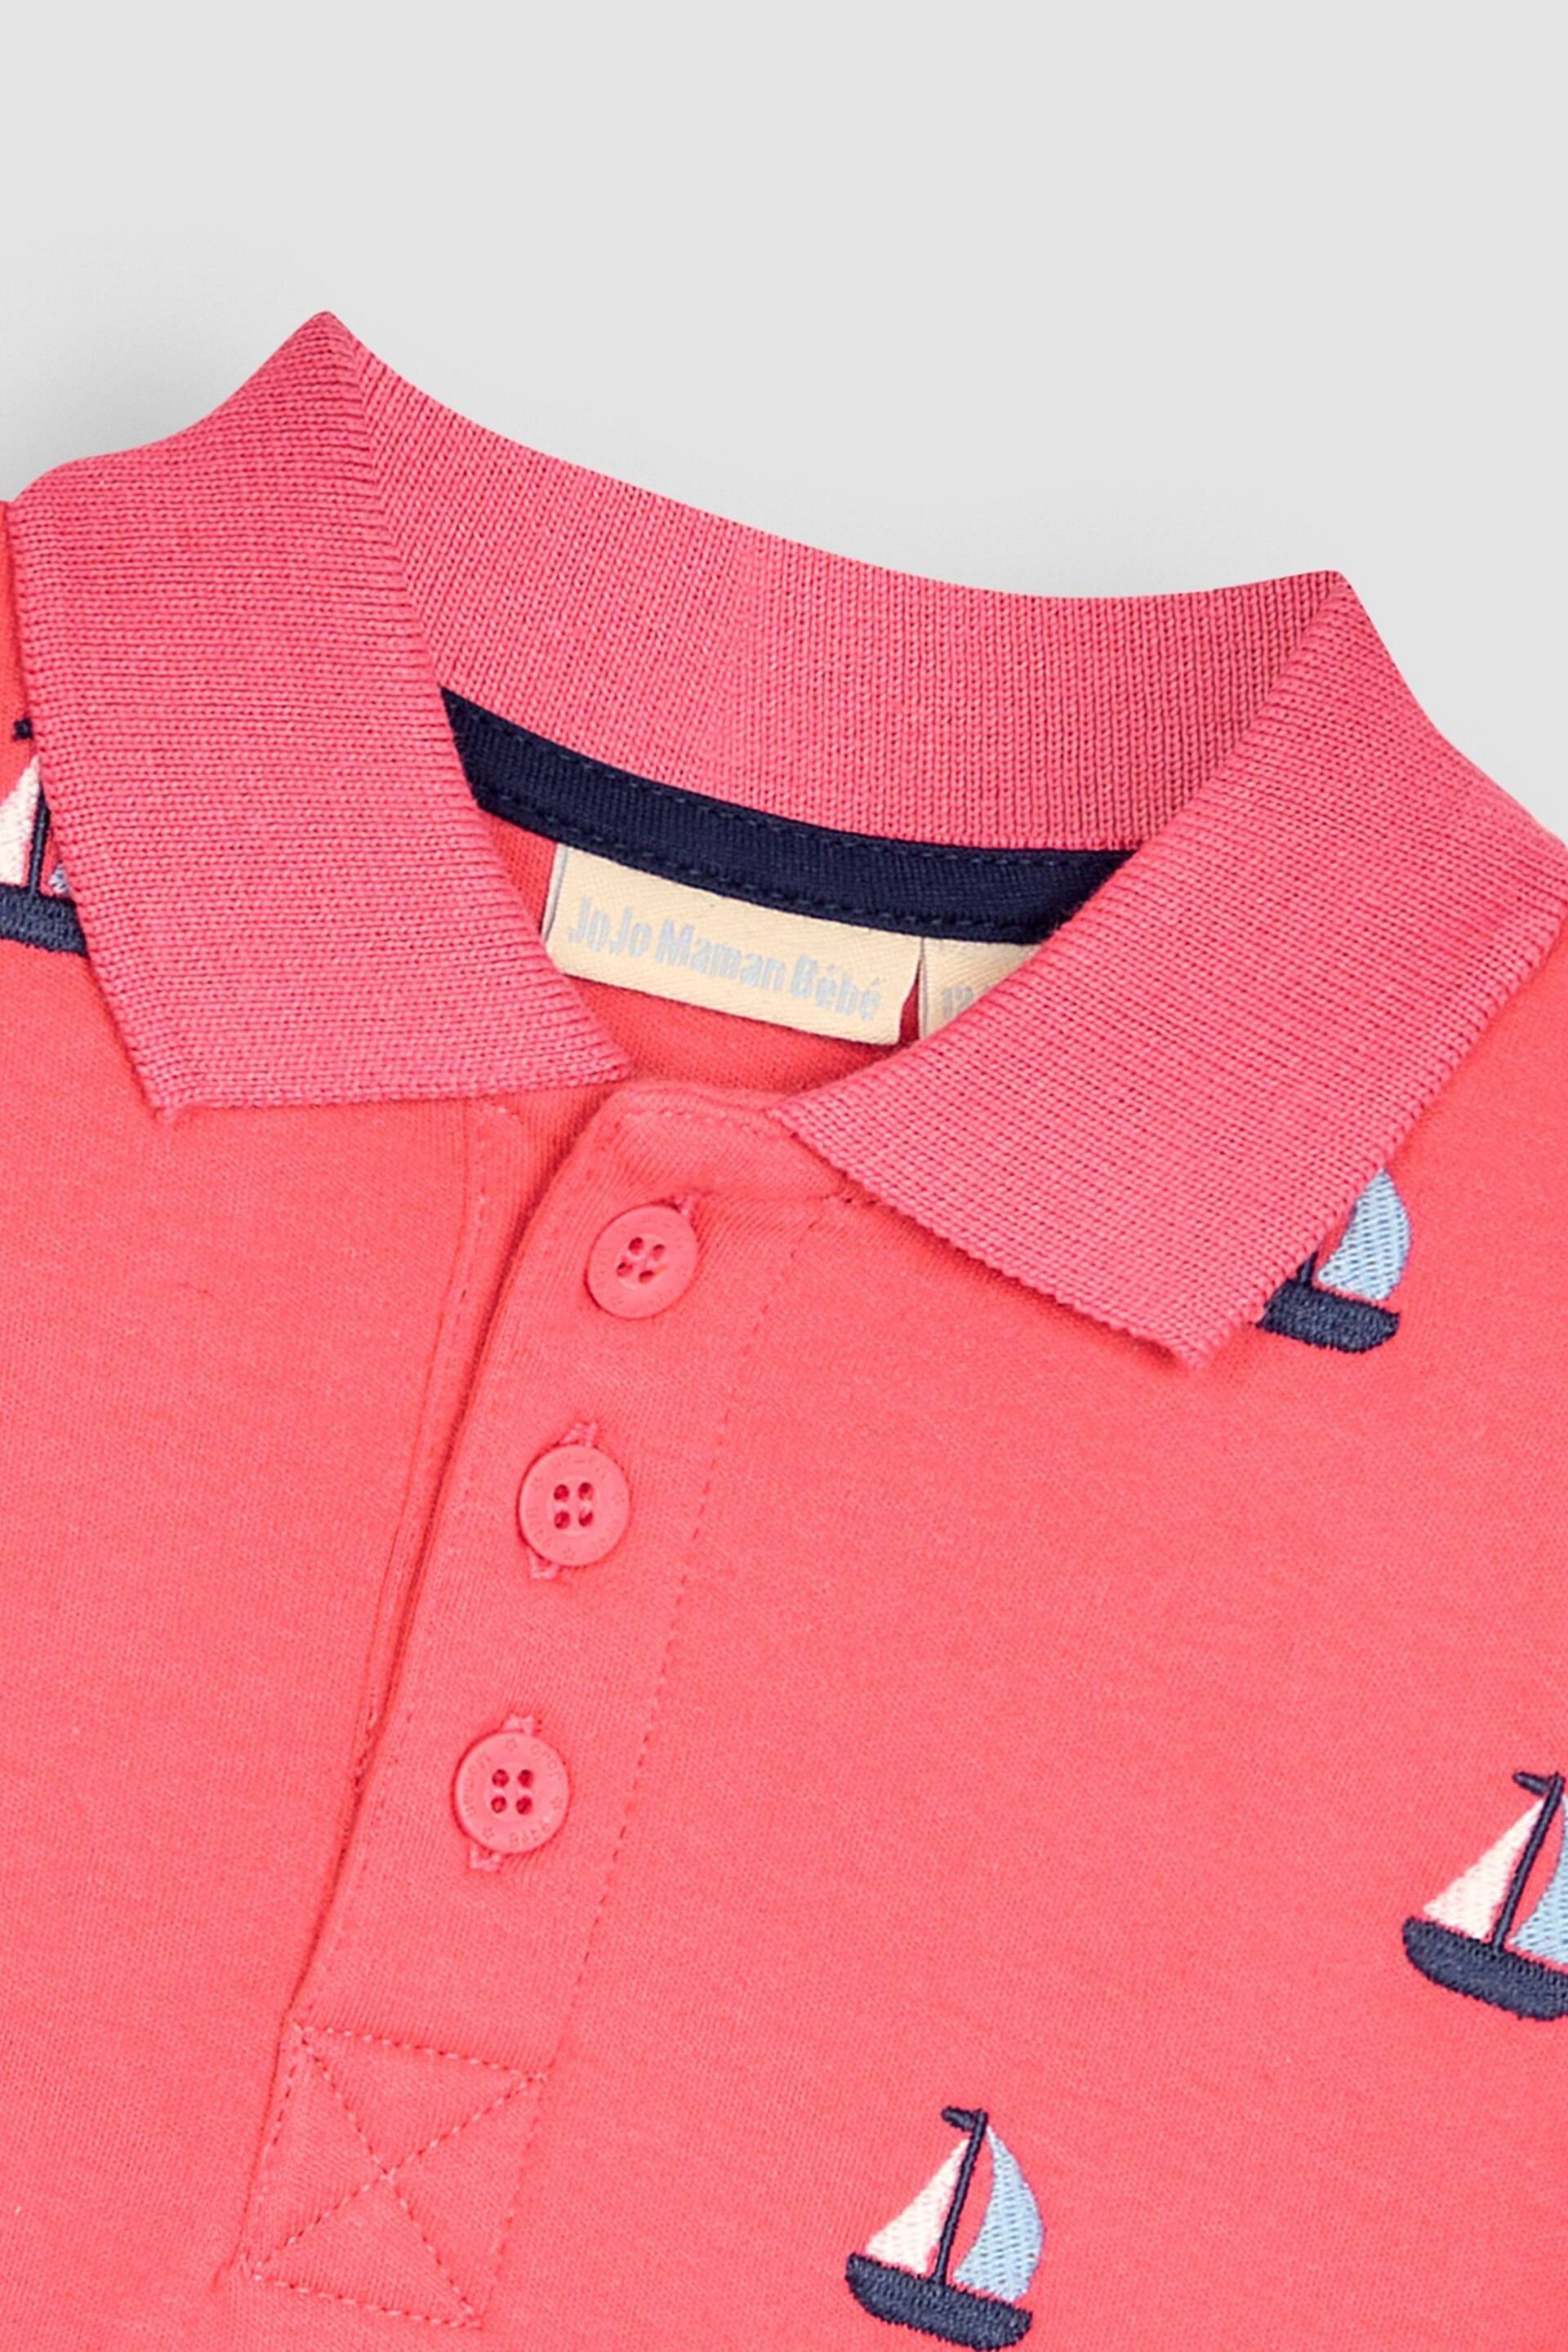 JoJo Maman Bébé Pink Sailboat Embroidered Polo Shirt - Image 2 of 3